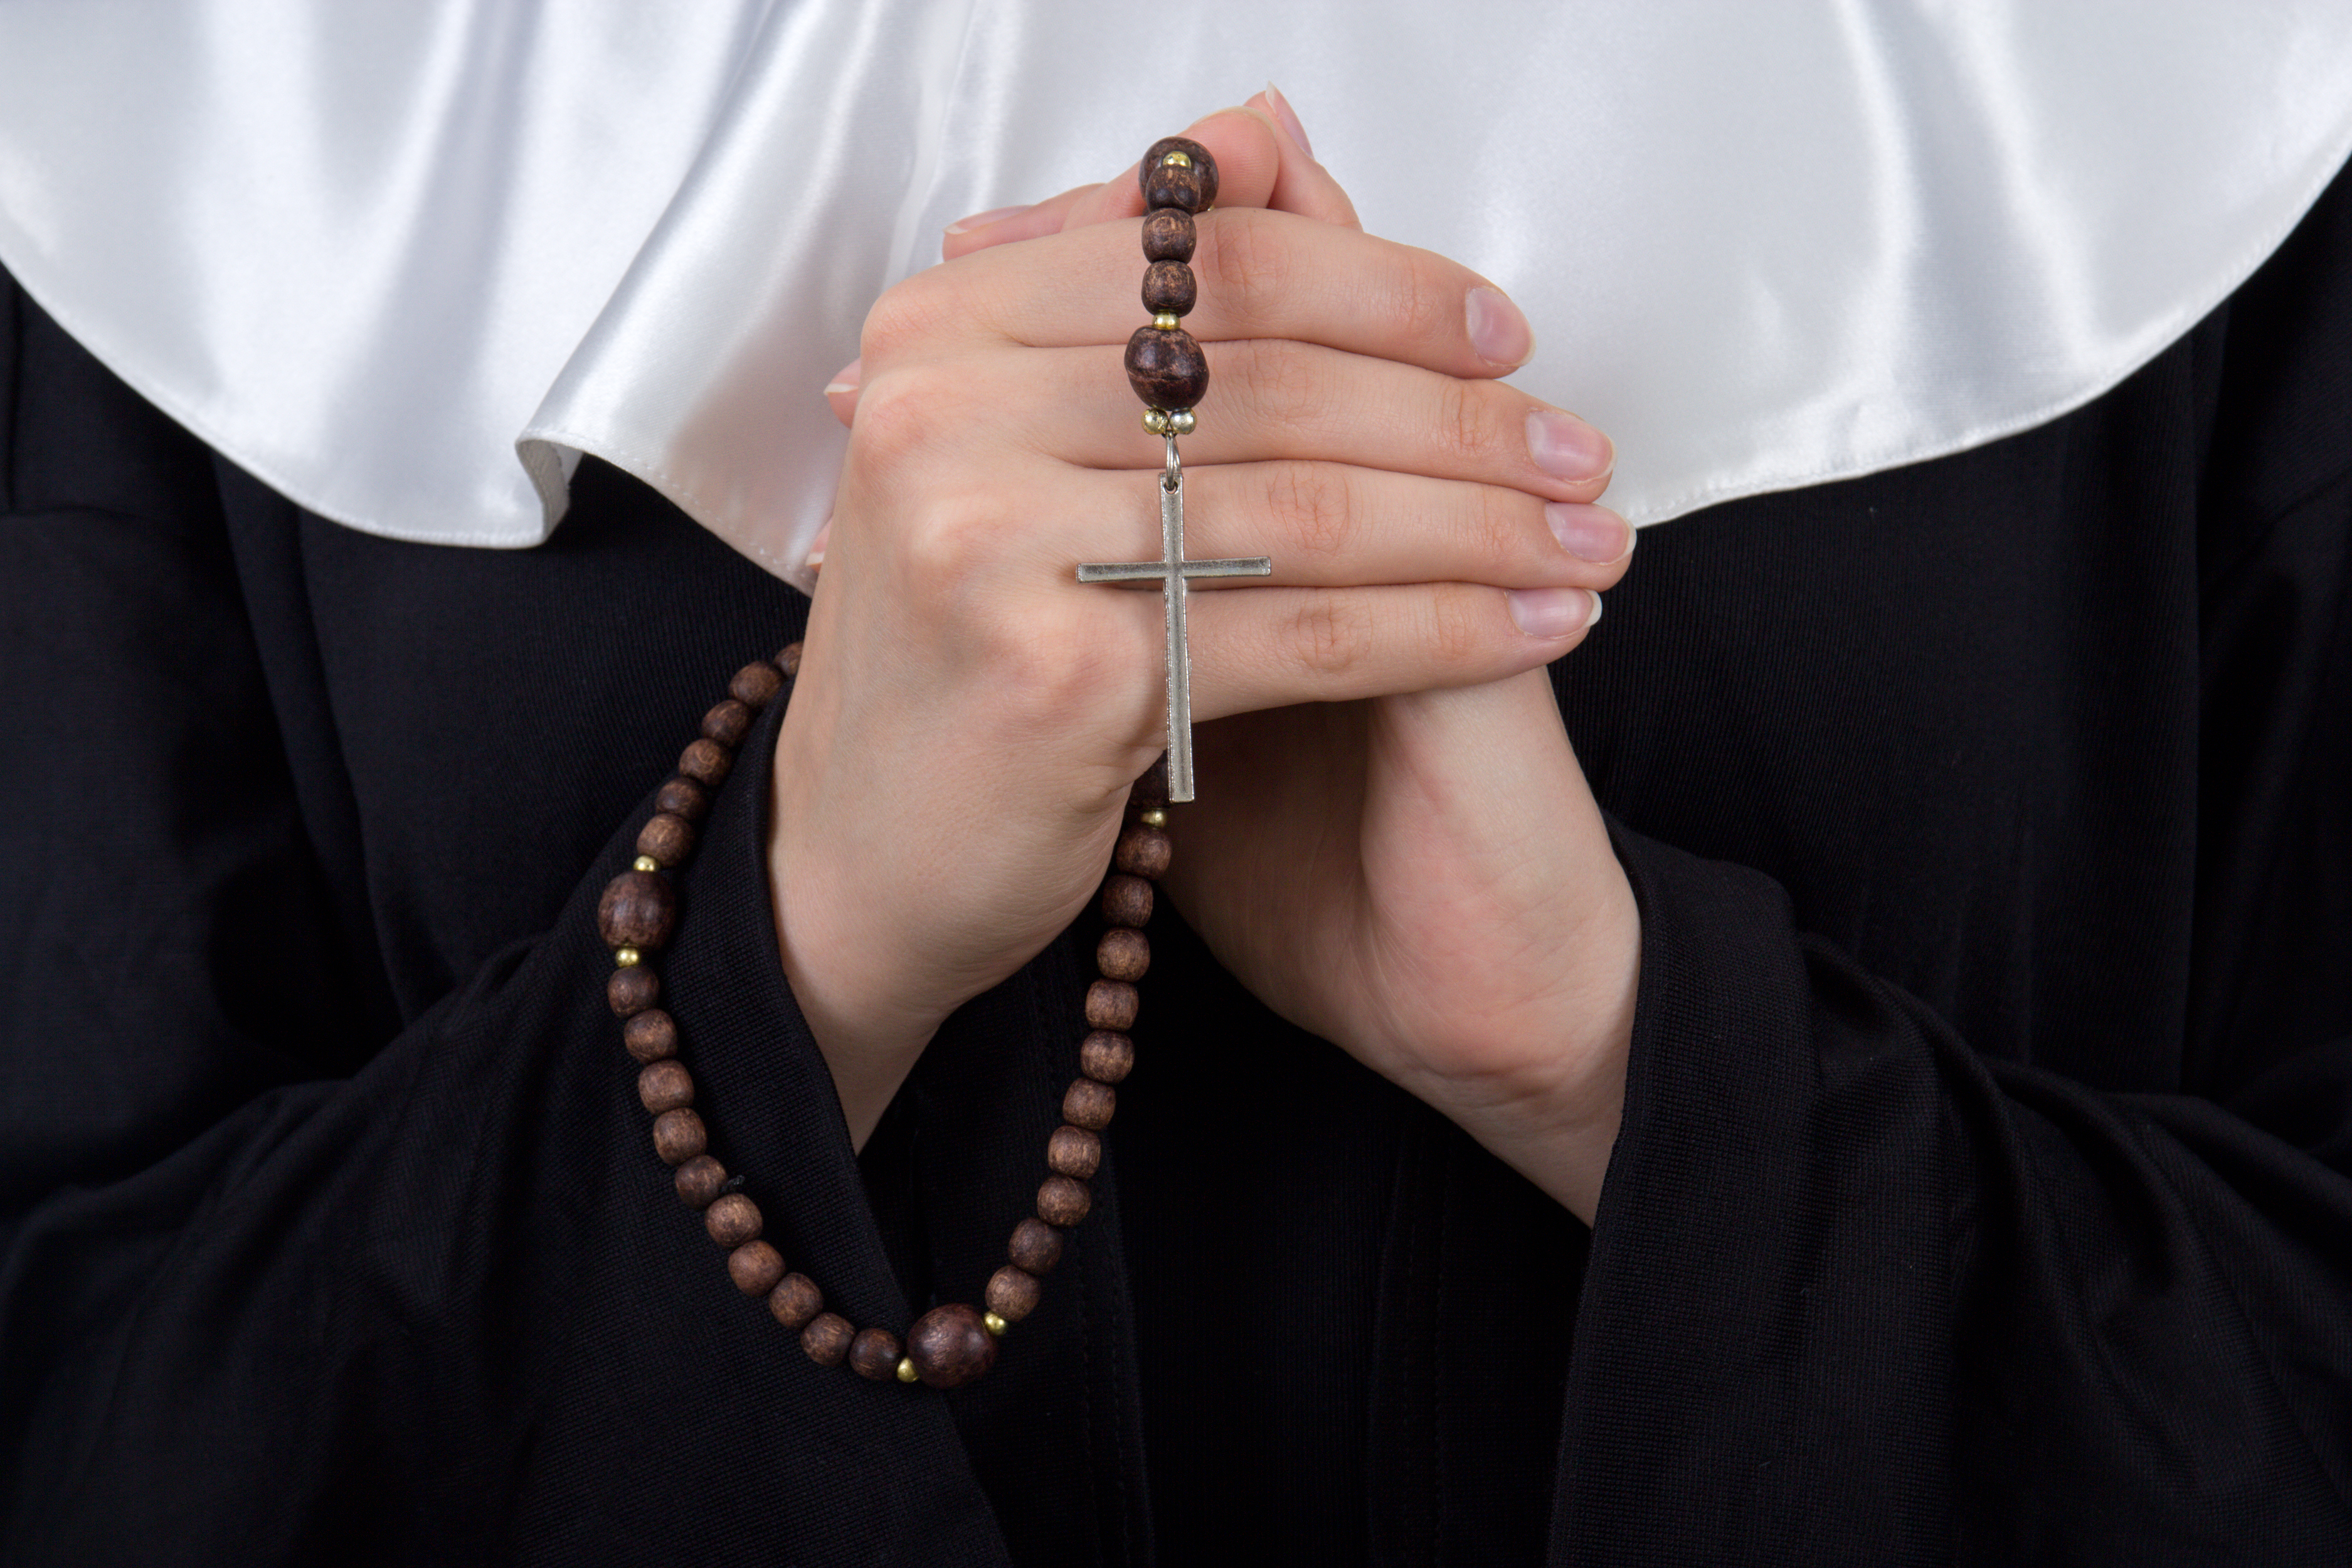 Texas nuns defy Vatican, seek restraining order on bishop